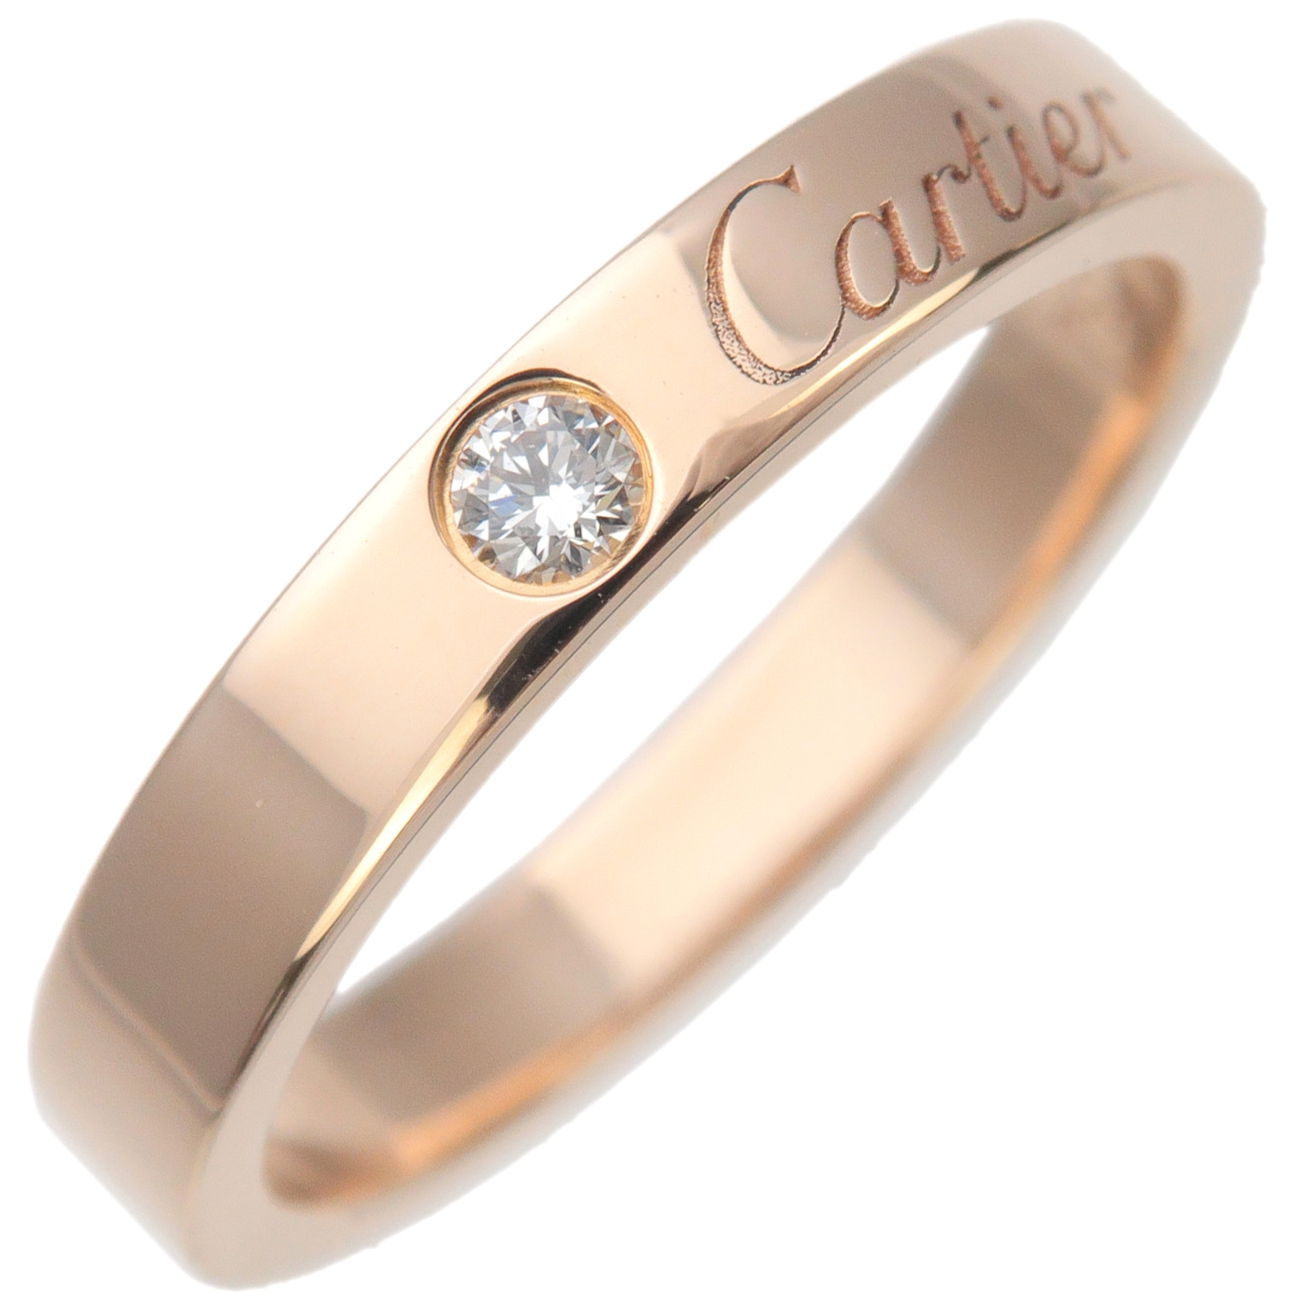 Cartier-Engraved-Ring-1P-Diamond-K18PG-750-Rose-Gold-#50-US5-5.5